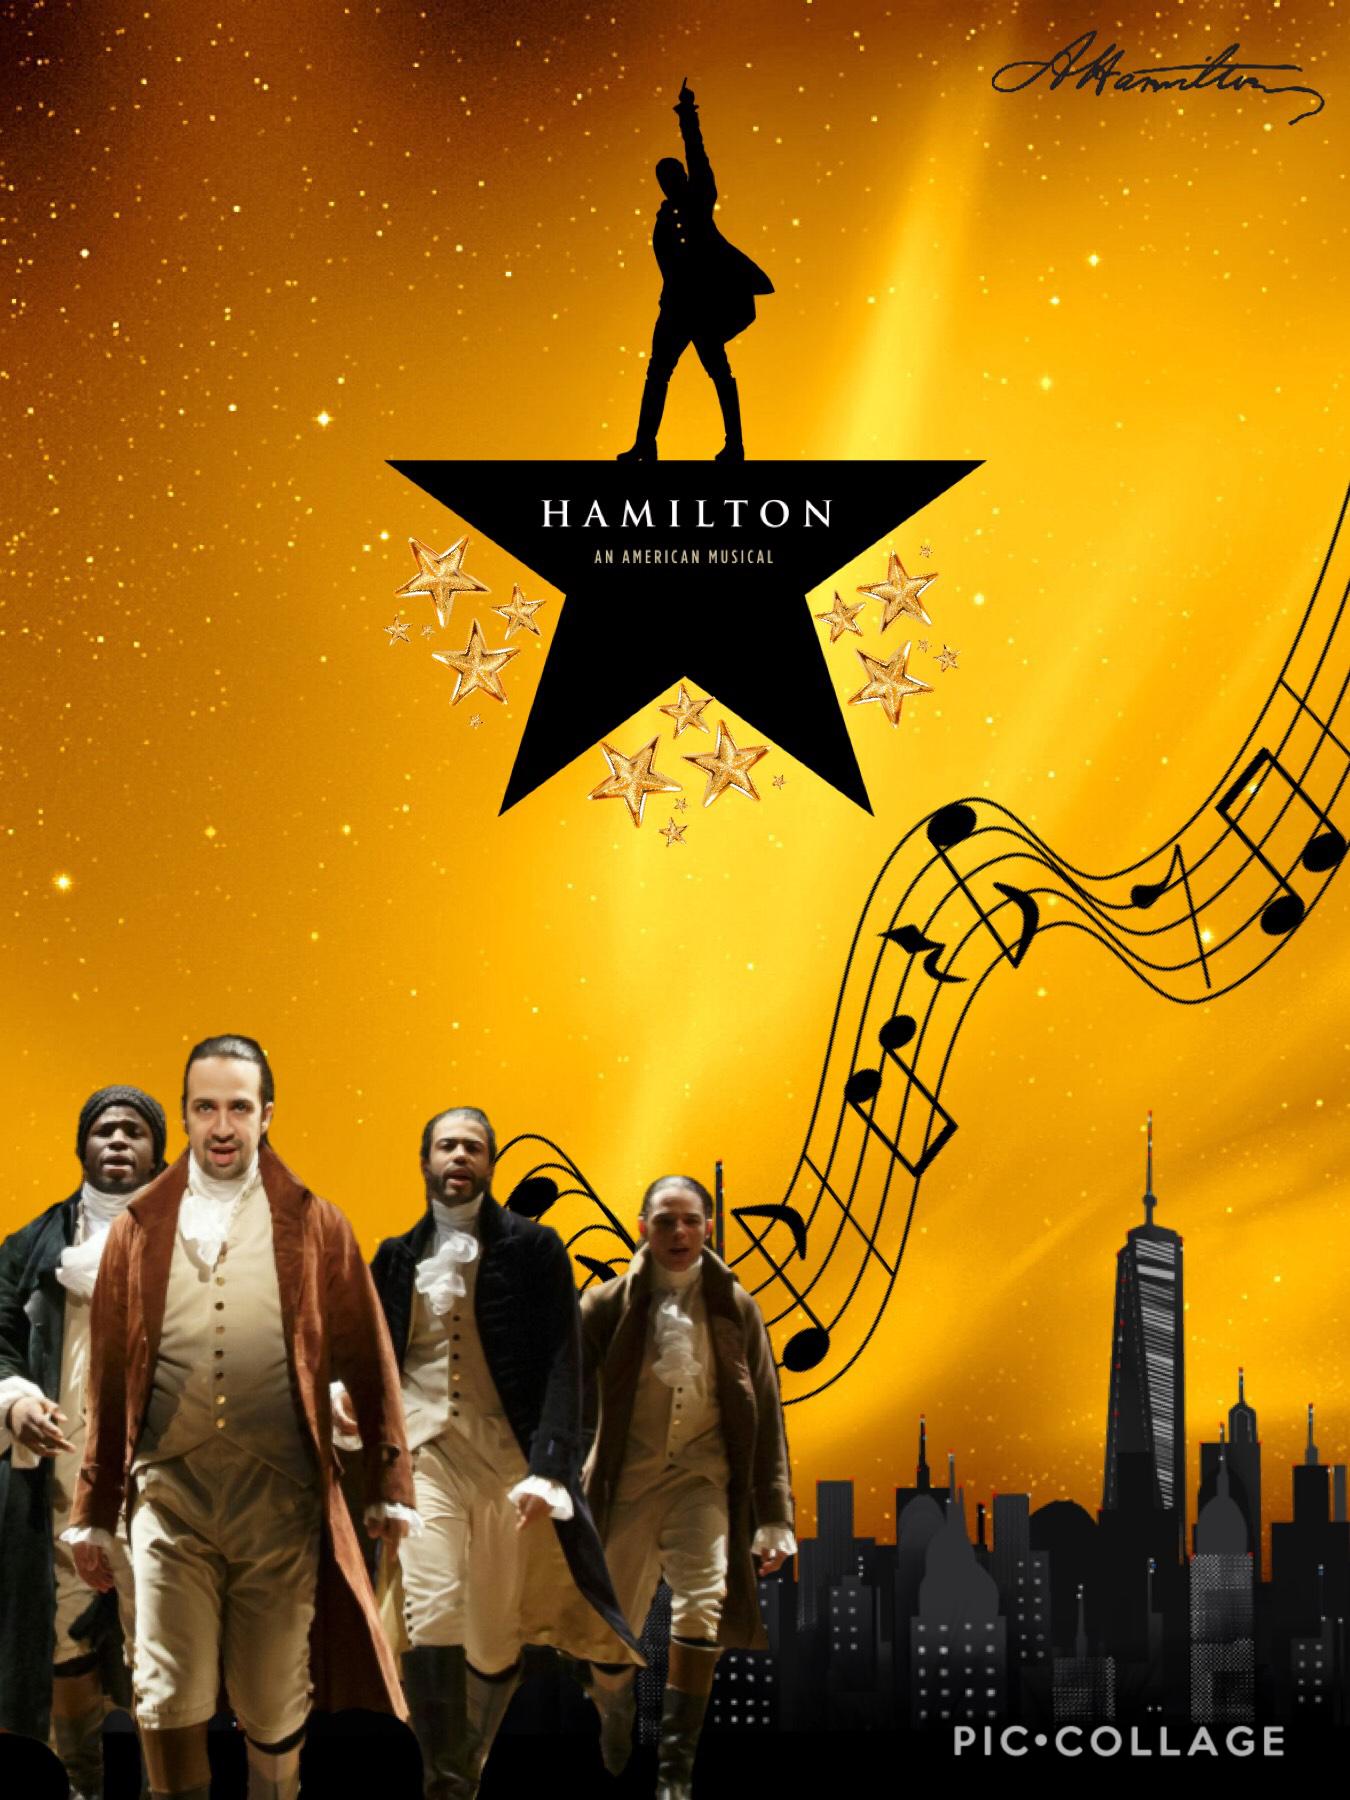 Any of you likes The Hamilton Musical???